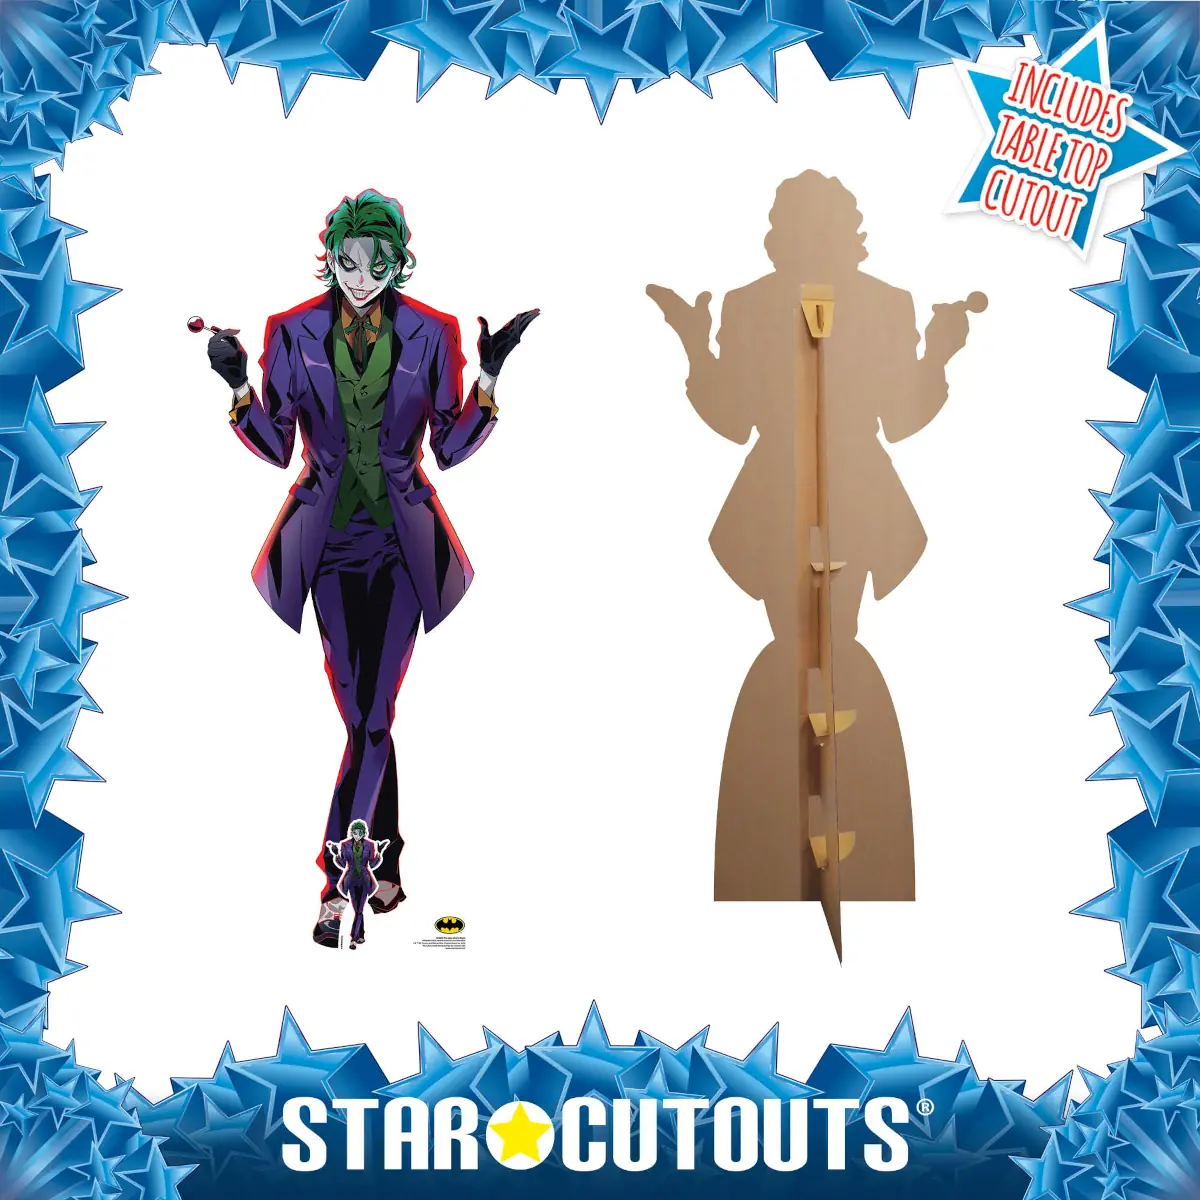 Amazon.com: Star Cutouts, Yu-Gi-Oh! Yami Yugi, Cardboard Cutout Stand-Up,  Anime Cartoon Life-Size Stand-In - 67